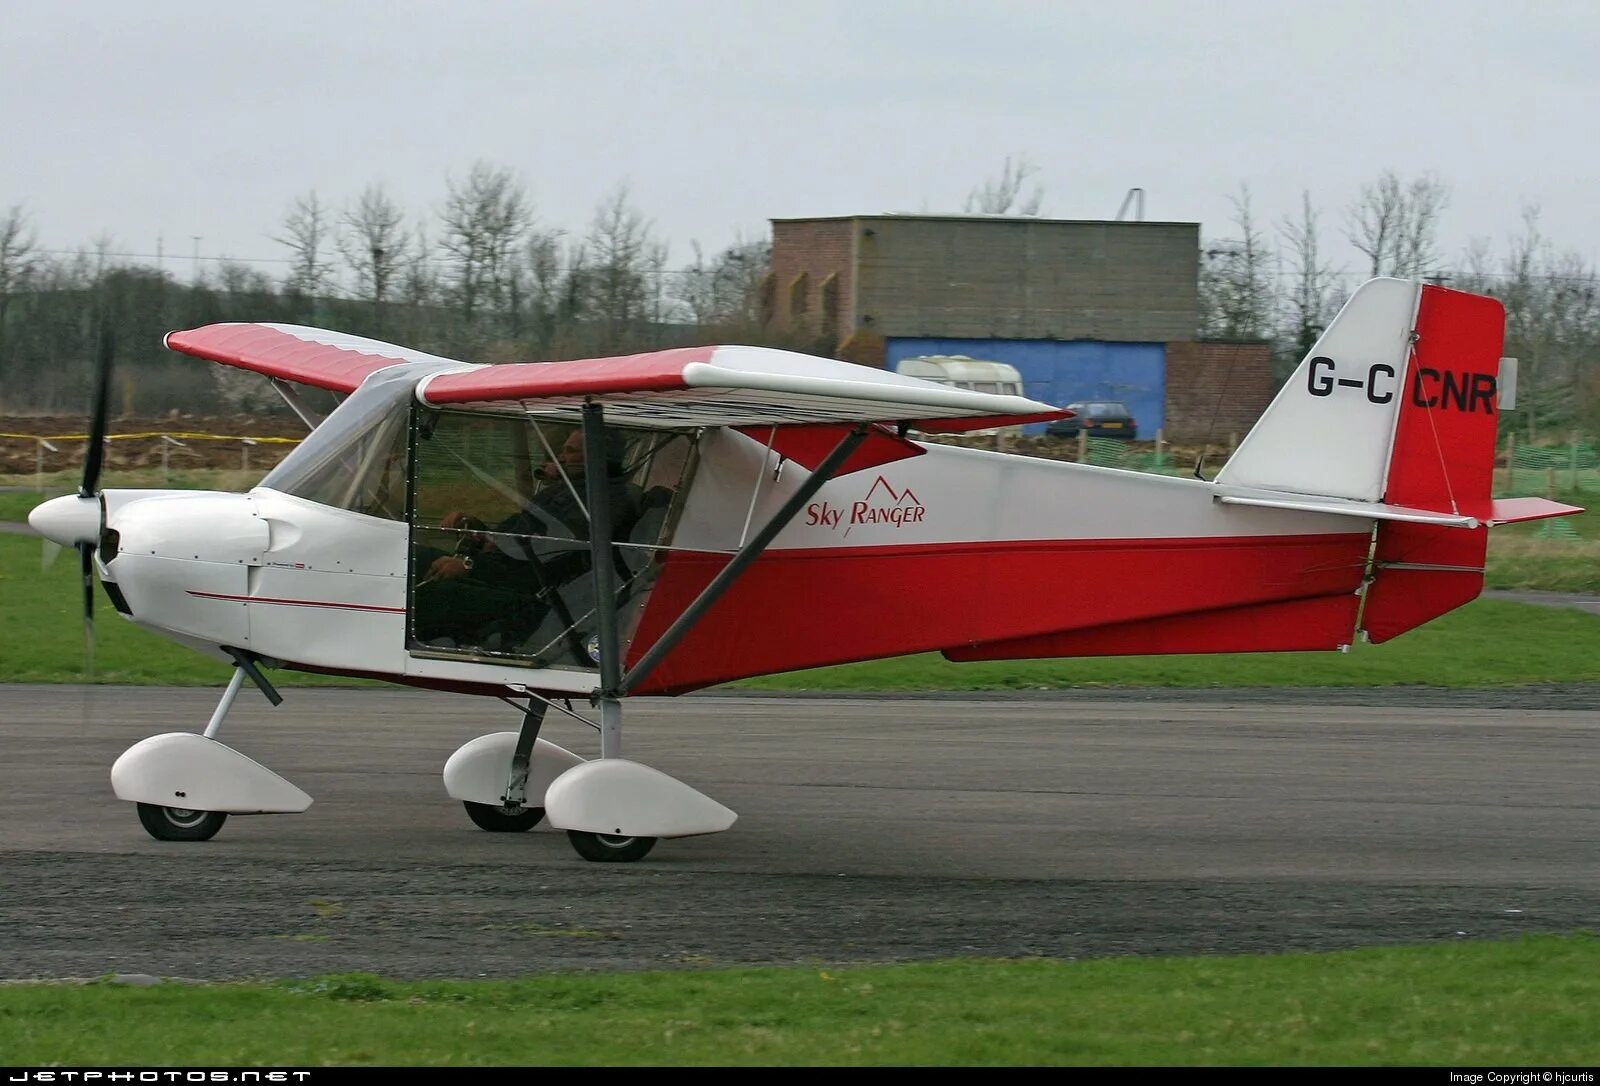 Sky ranger. Skyranger самолет. Skyranger 912(2). Sky Ranger легкий одномоторный. Скай рейнджер самолет.